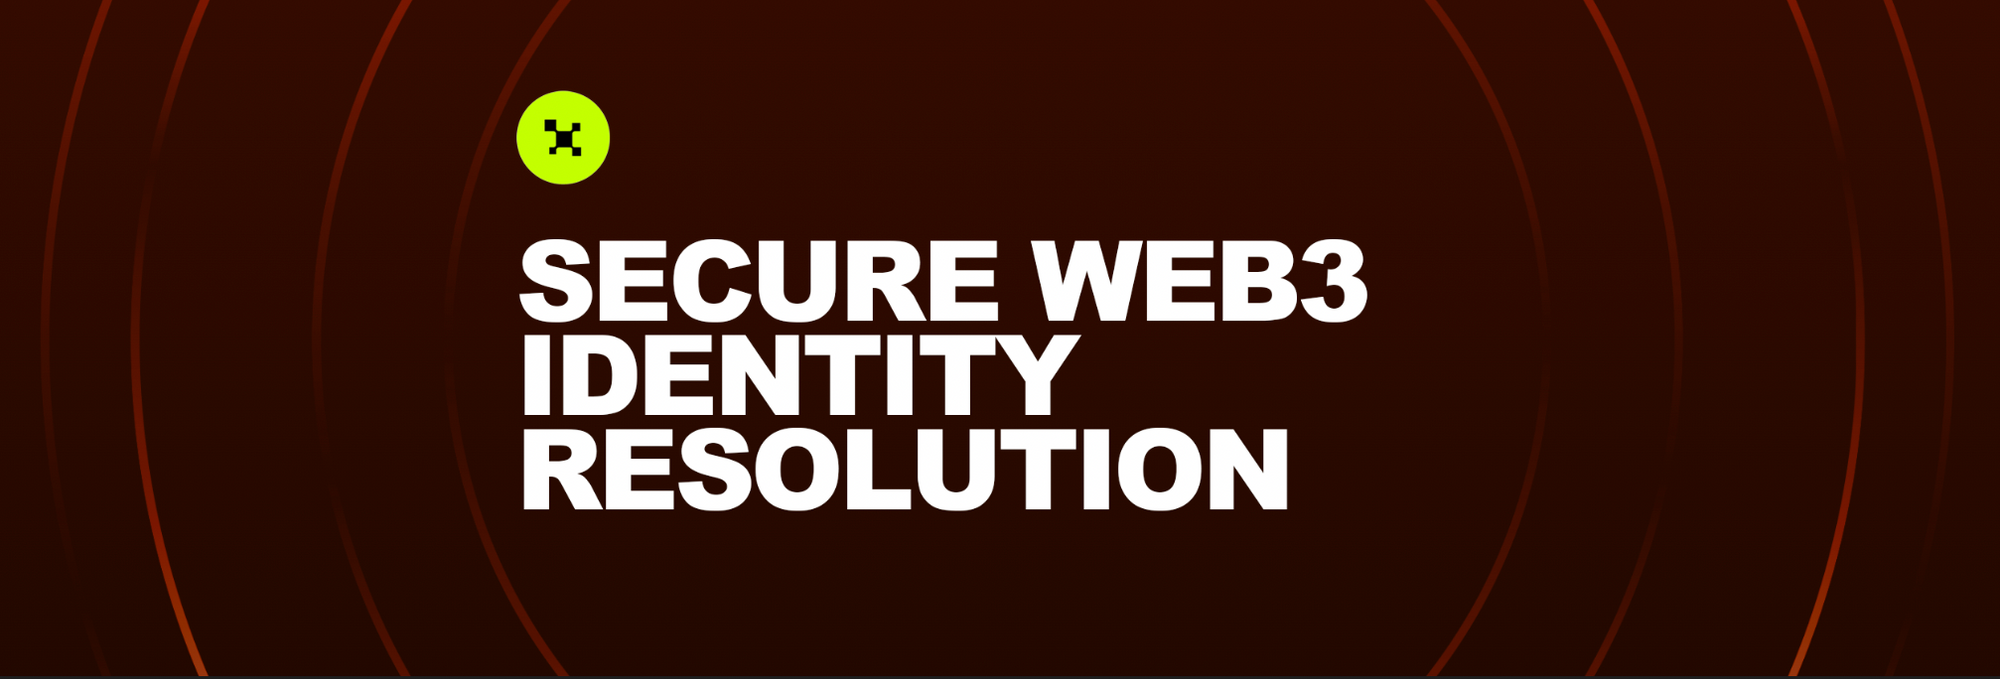 Web3 Identity Resolution: Security Considerations